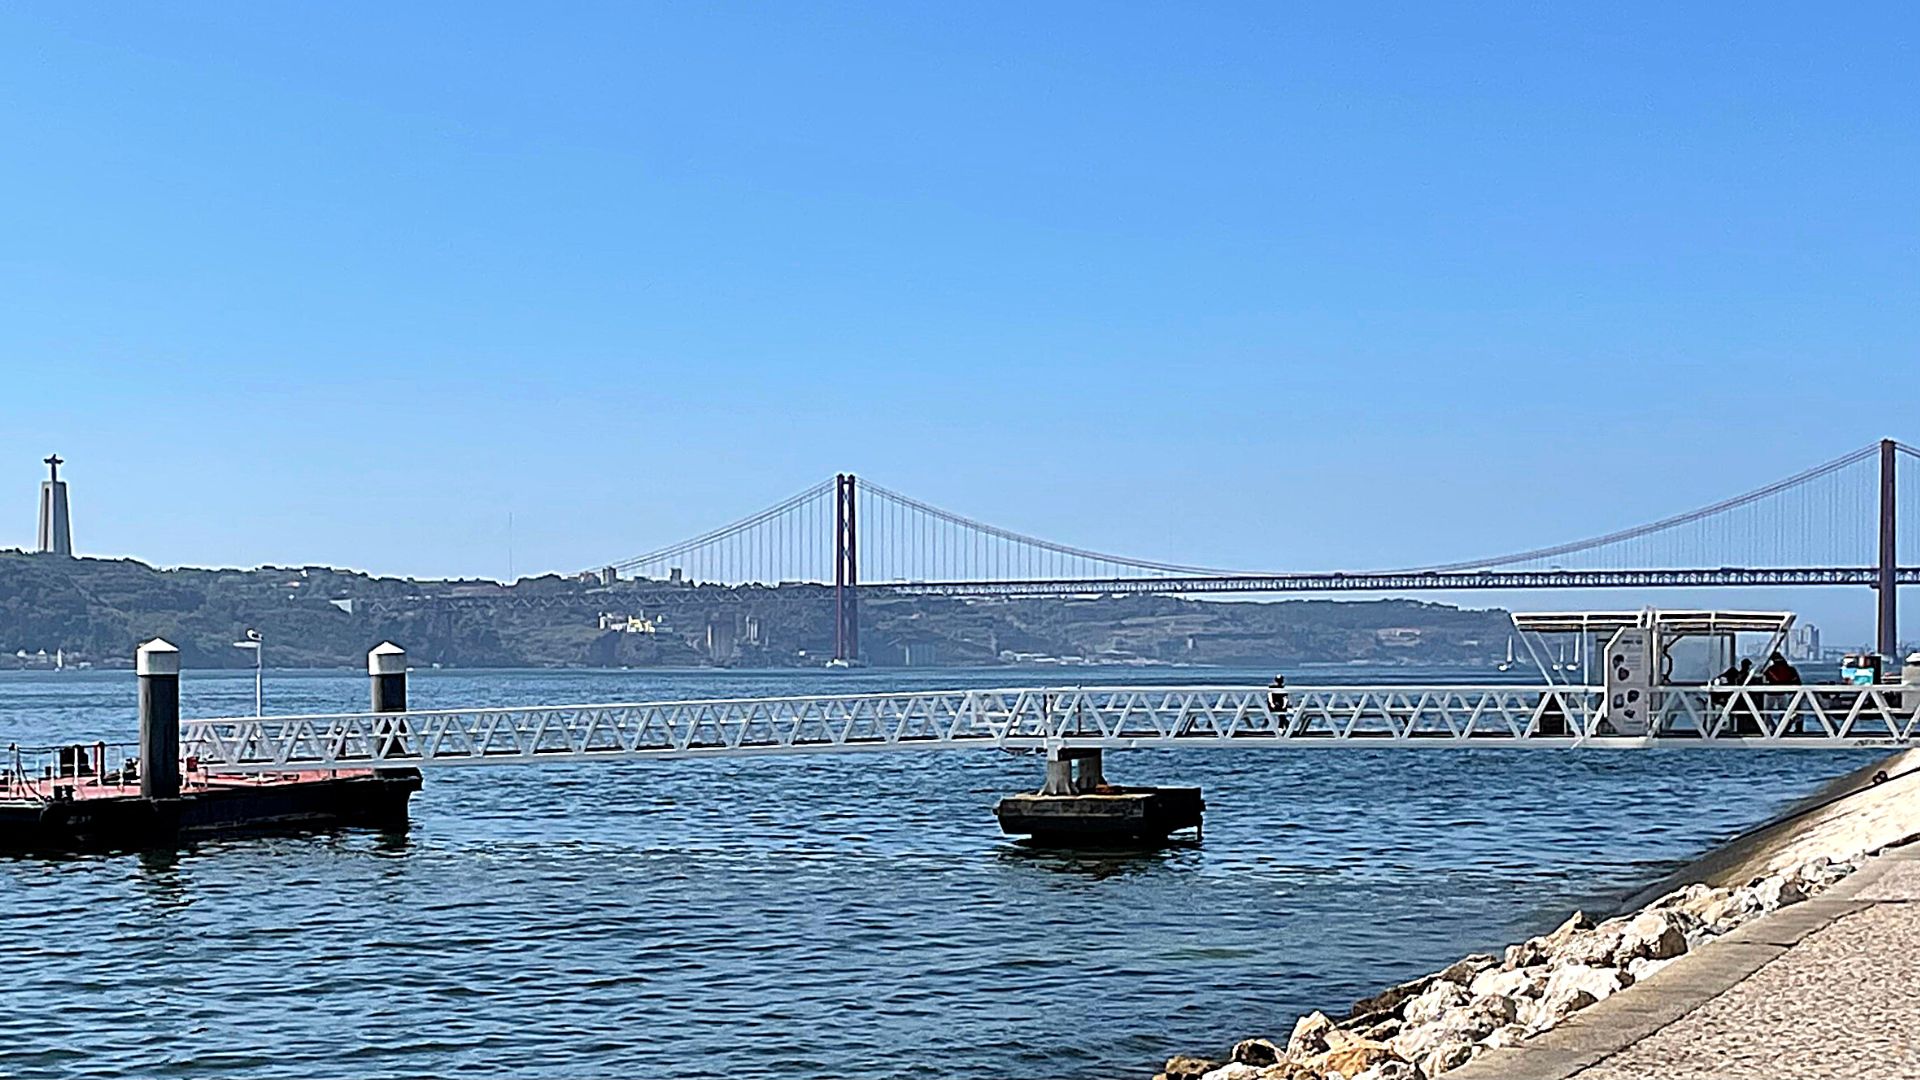 The Abril 25 Bridge